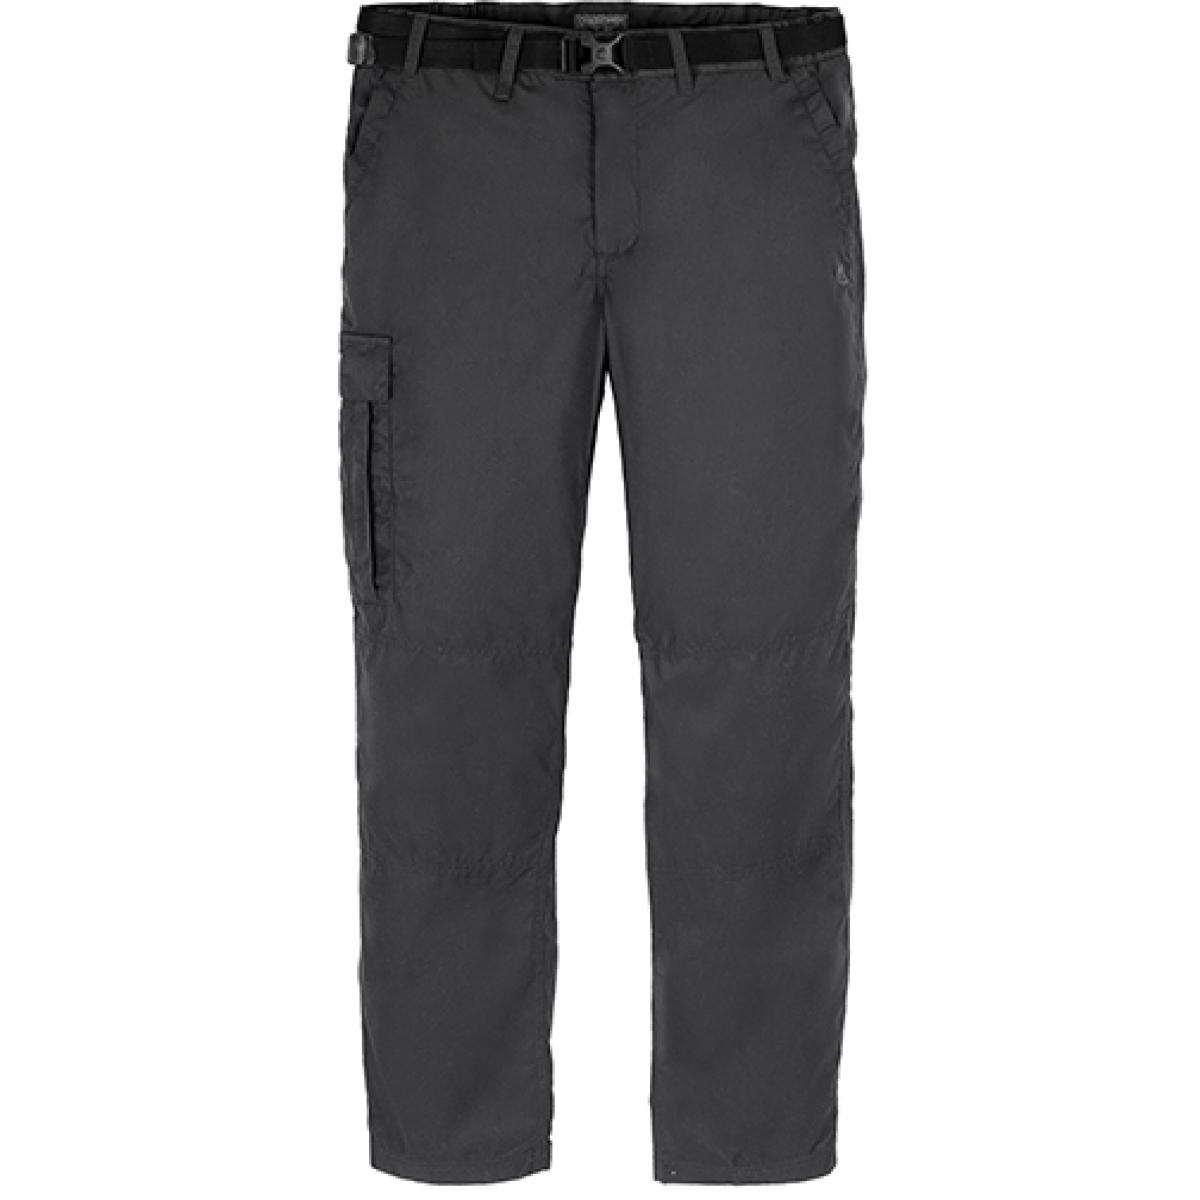 Hersteller: Craghoppers Expert Herstellernummer: CEJ001 Artikelbezeichnung: Expert Kiwi Tailored Trousers - Arbeithose Farbe: Carbon Grey